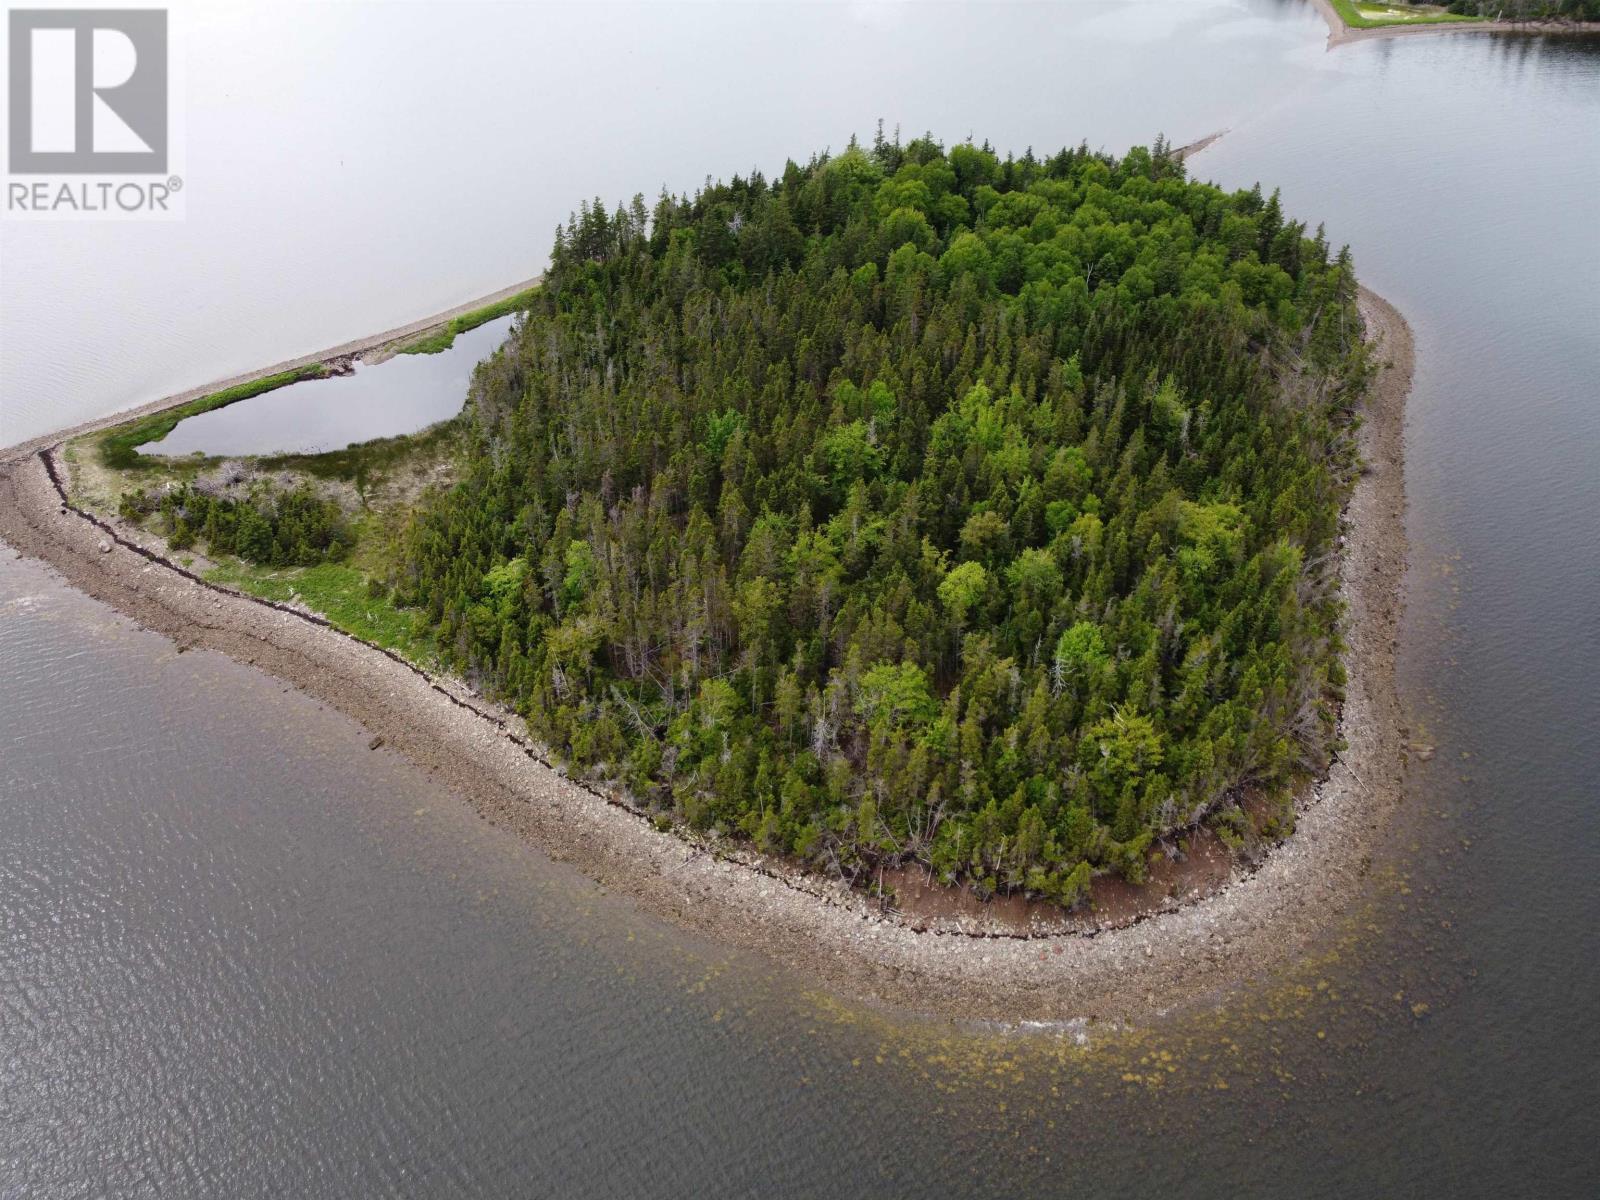 Indian Island, false bay, Nova Scotia